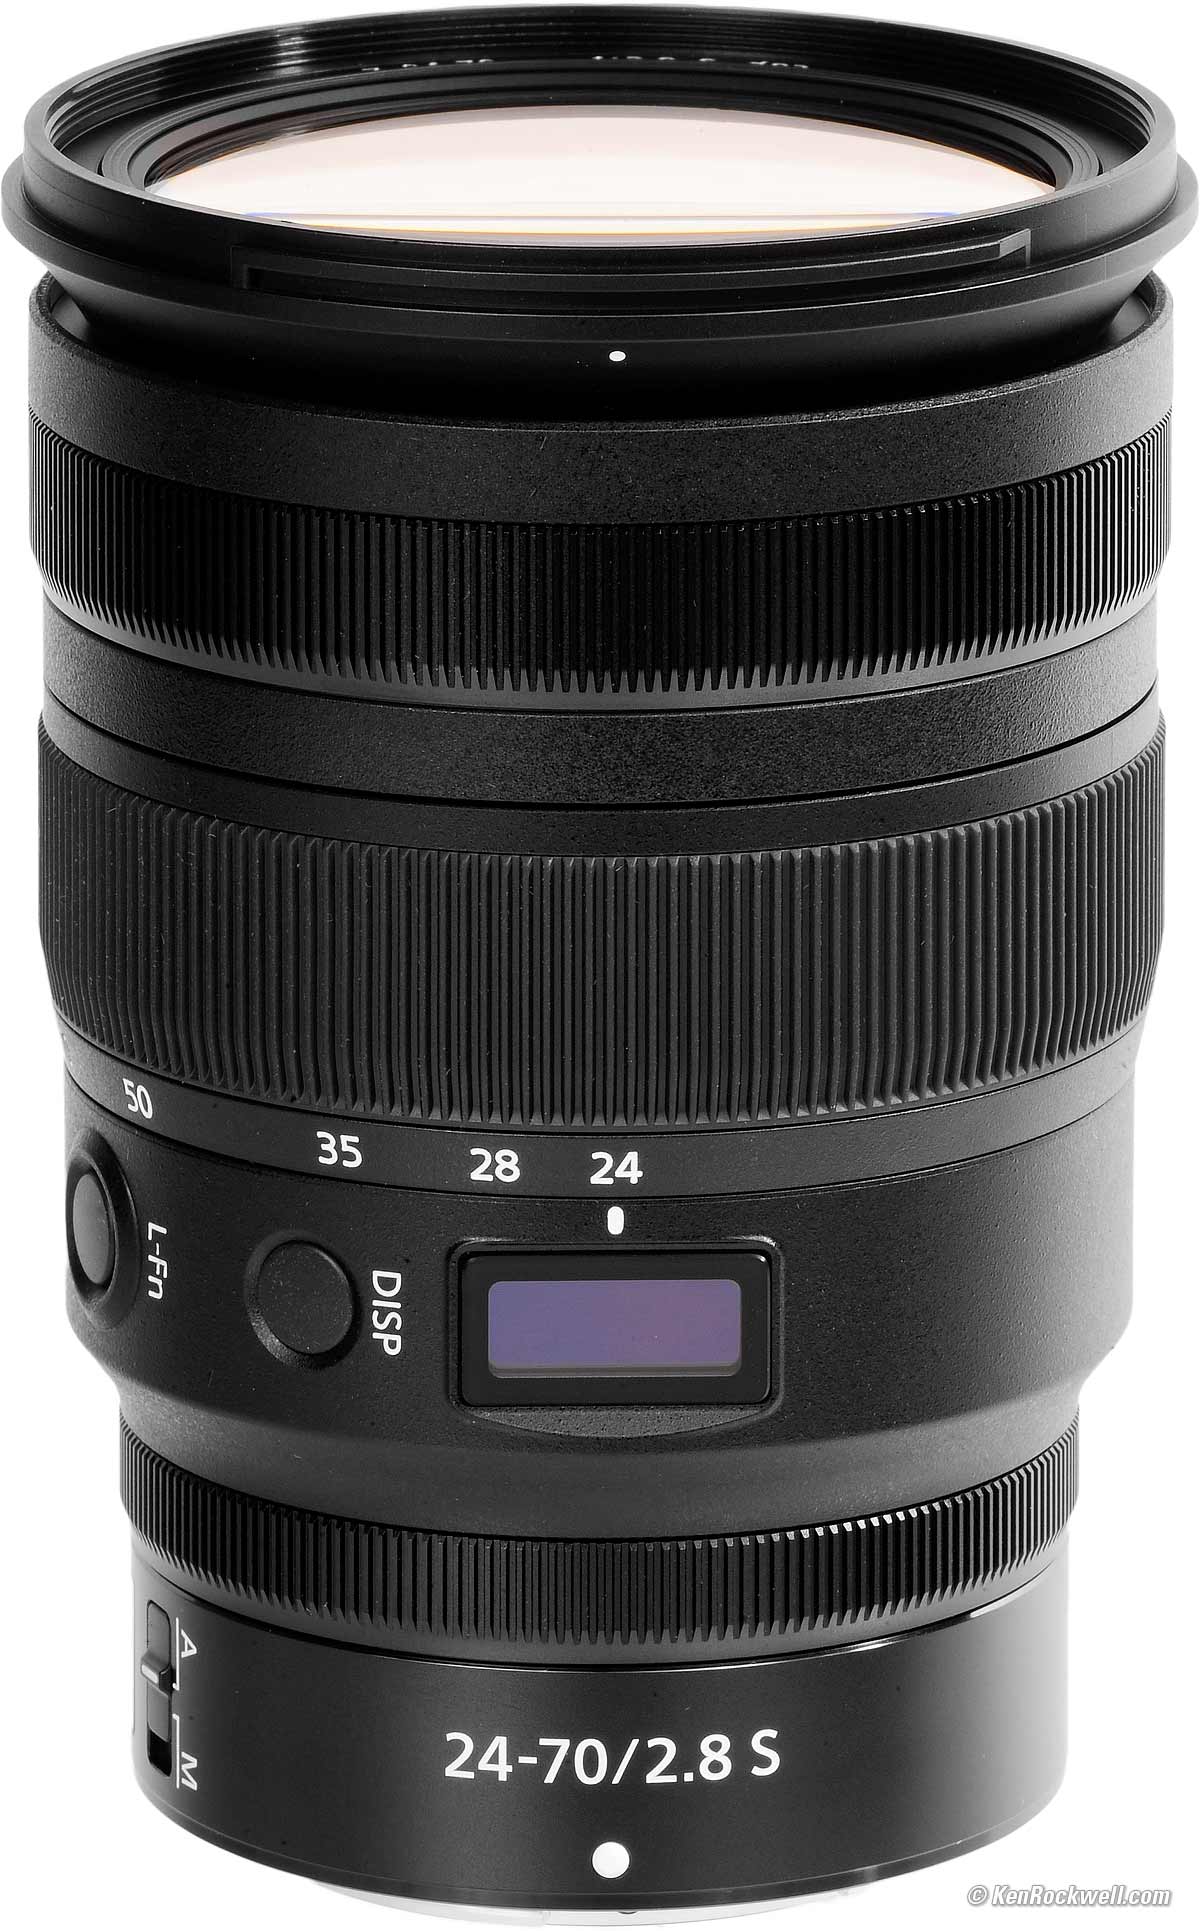 Nikon Z6 II w/ Z 24-70mm Camera Review - Consumer Reports